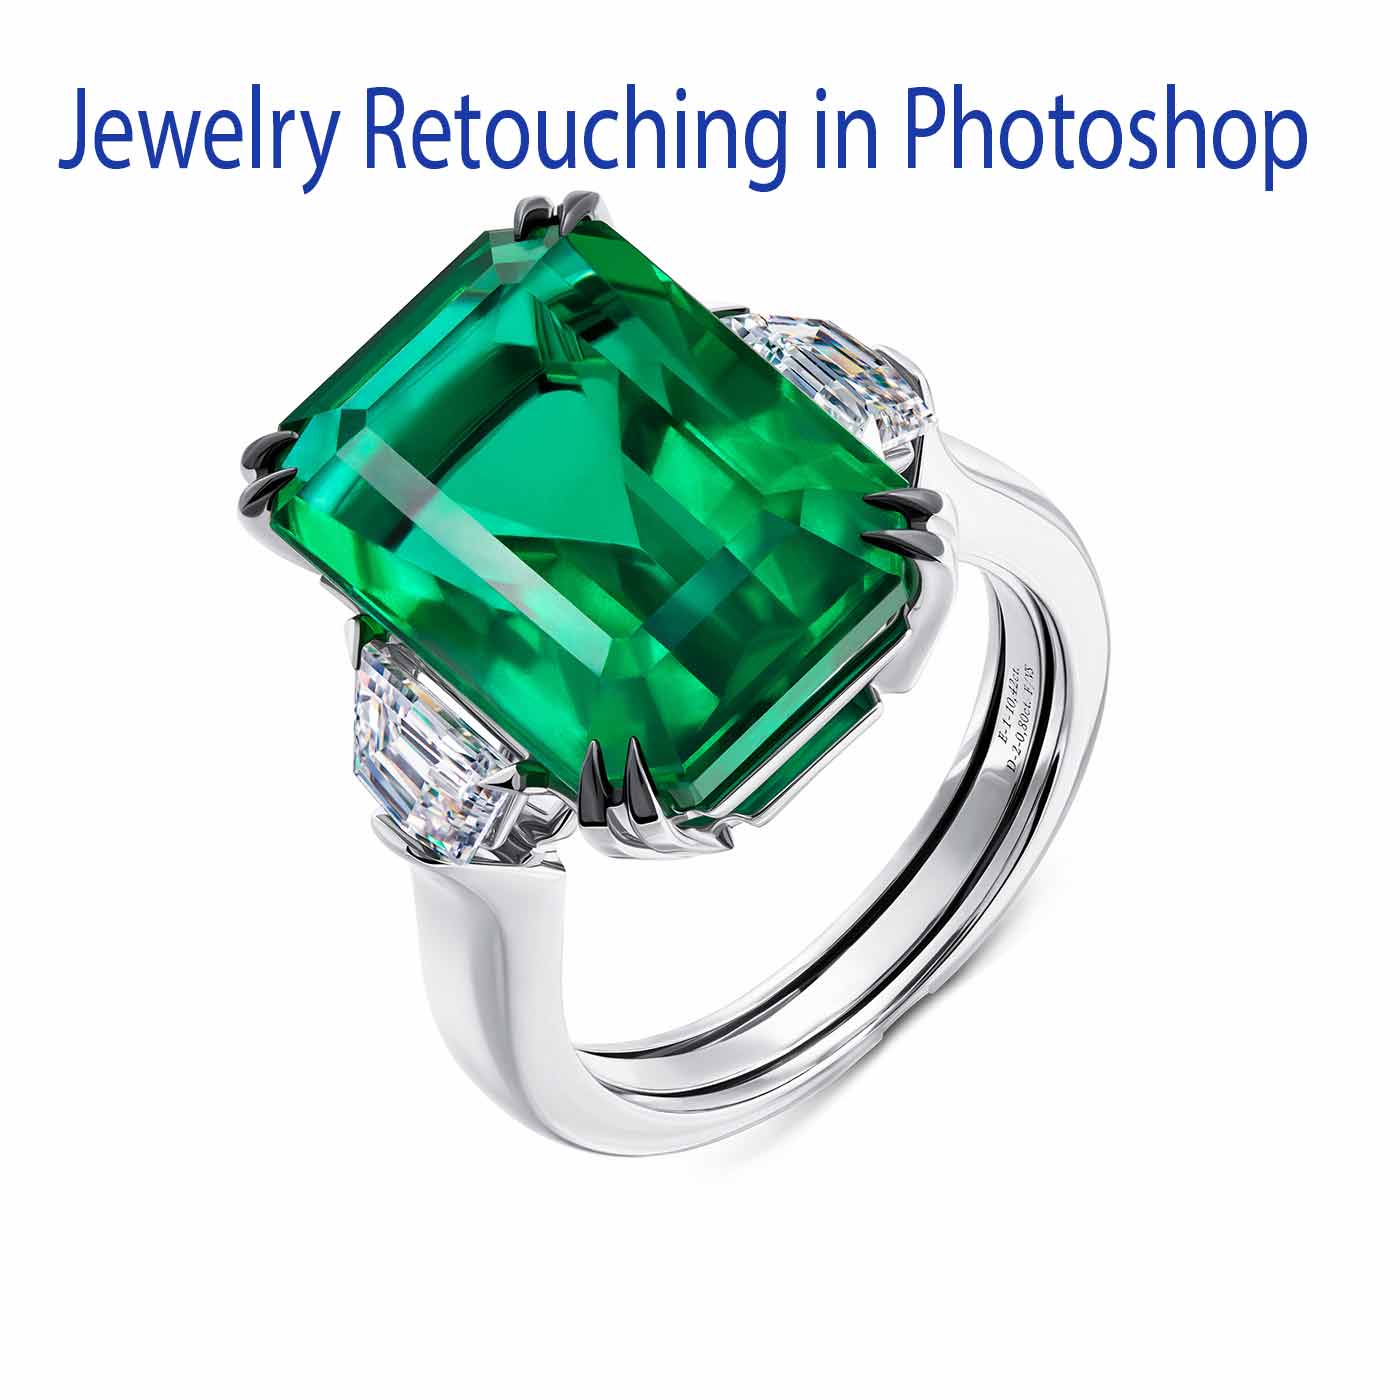 Jewelry-Retouching-in-Photoshop